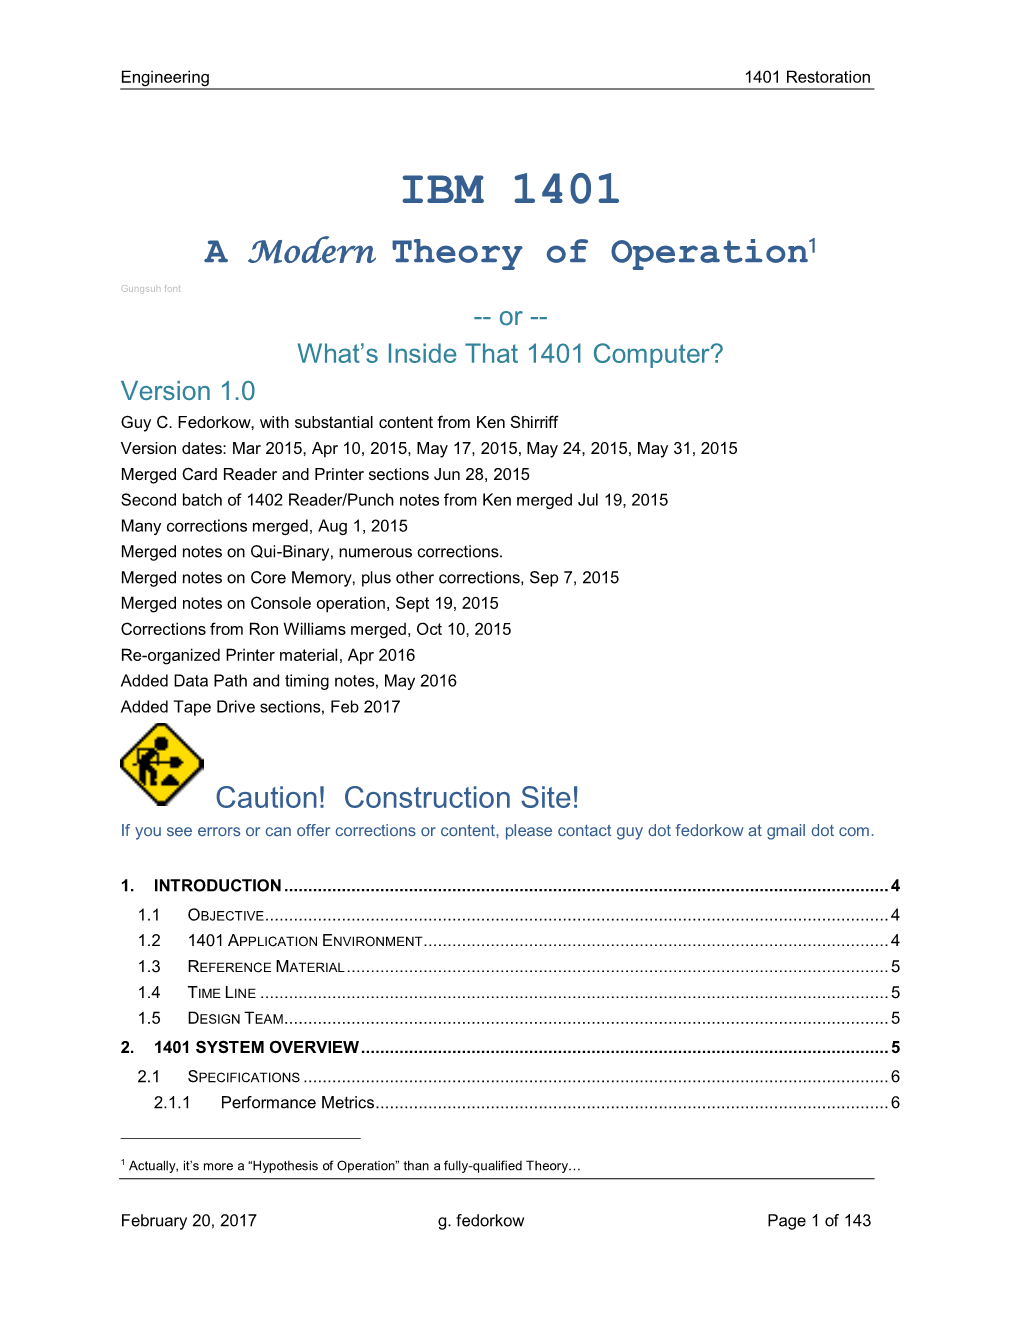 IBM 1401, a Modern Theory of Operation